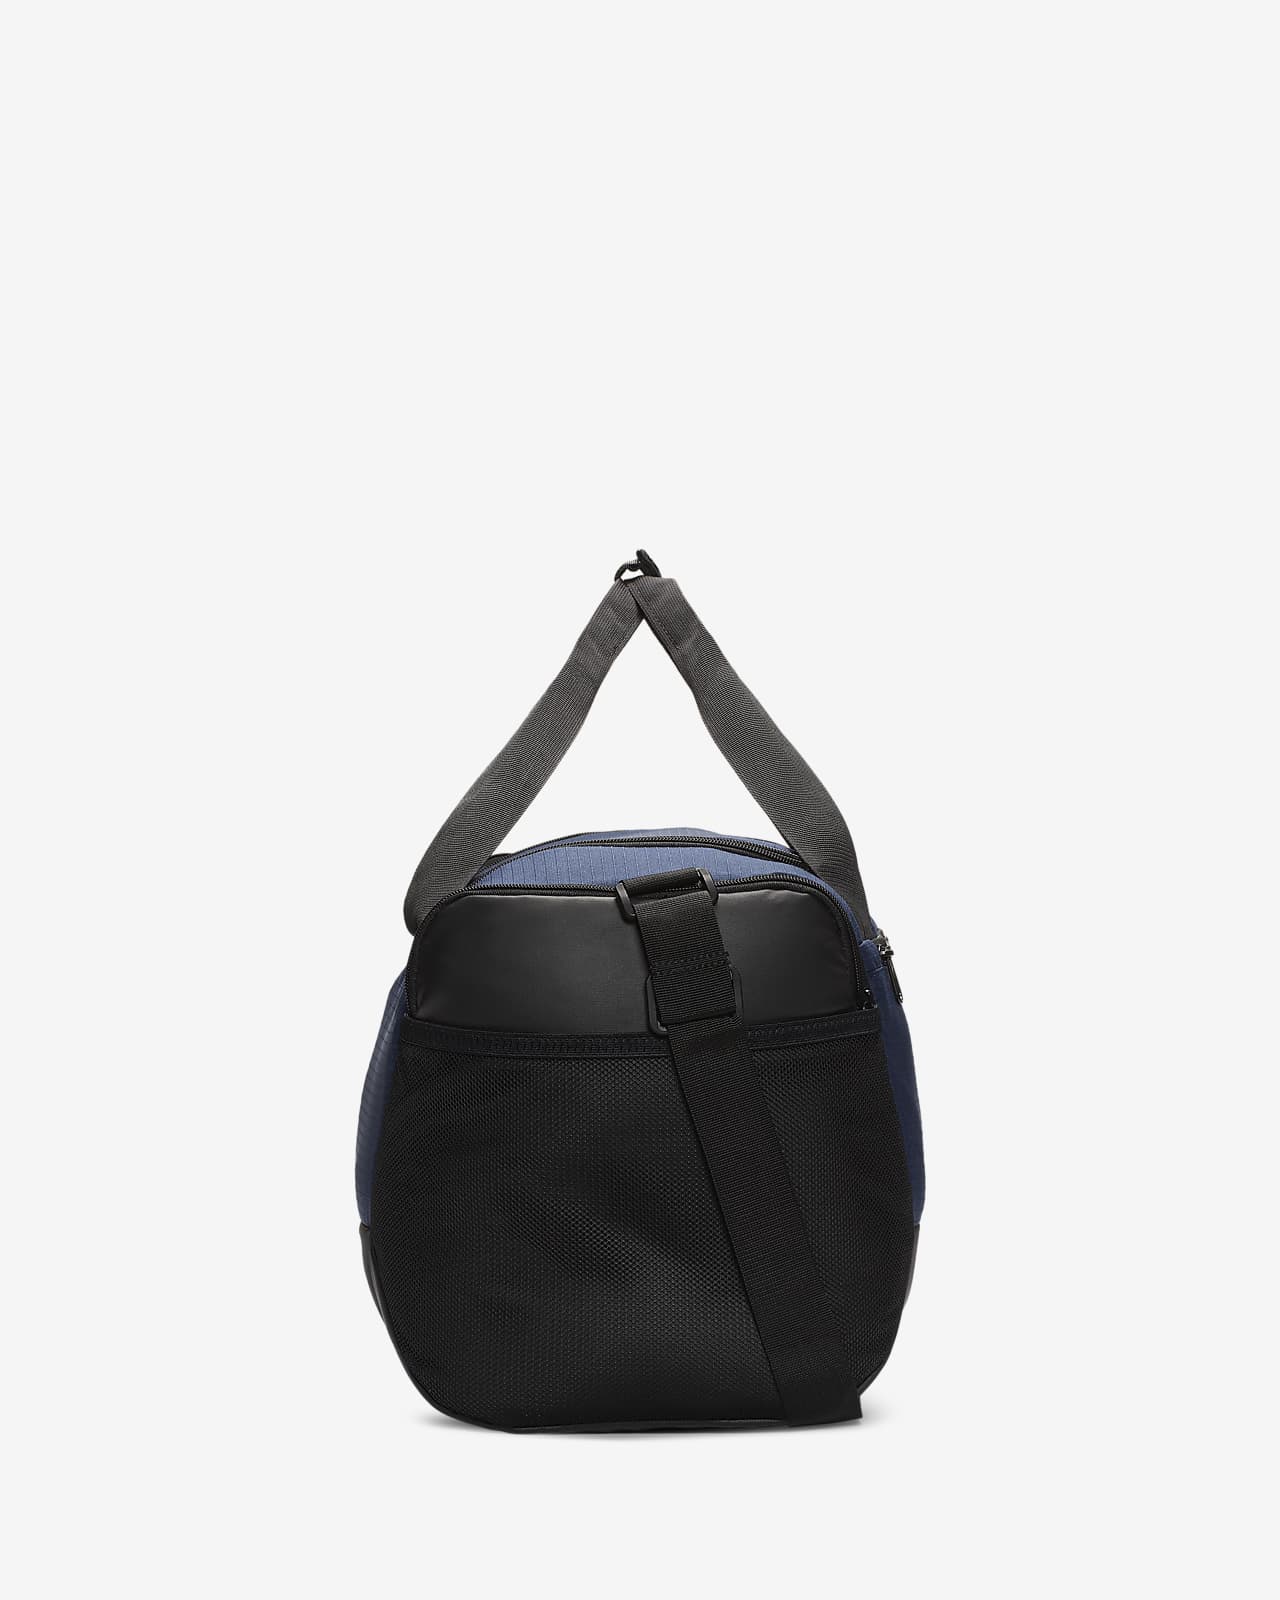 Nike Brasilia Small Duffel Polyester Duffle Bag Hobo - Black / White 